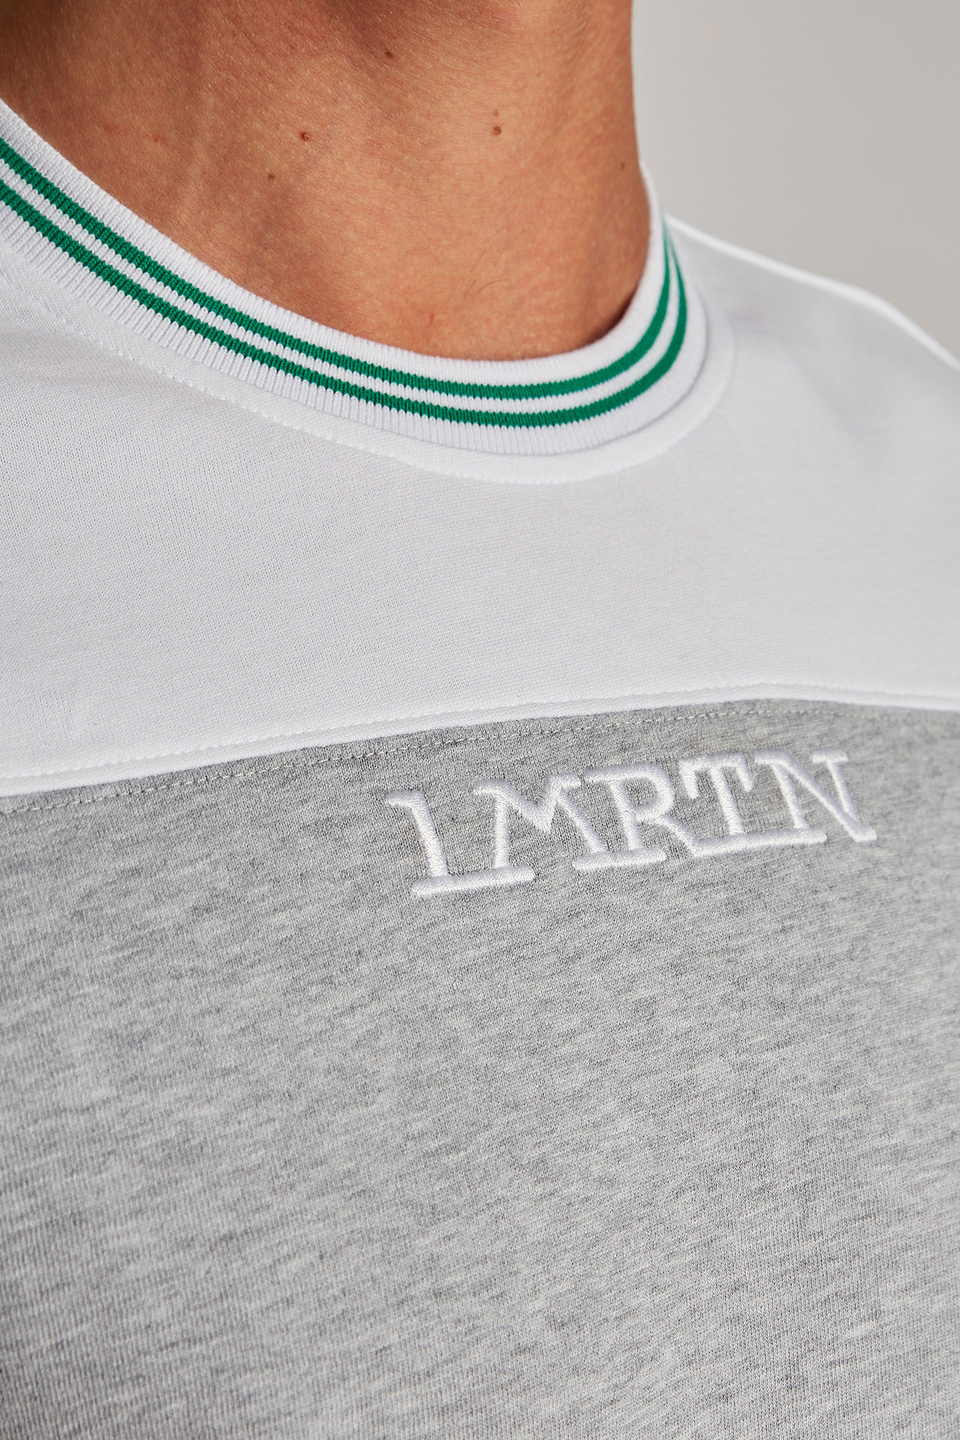 Camiseta de hombre de manga corta con cuello en contraste, modelo oversize - La Martina - Official Online Shop